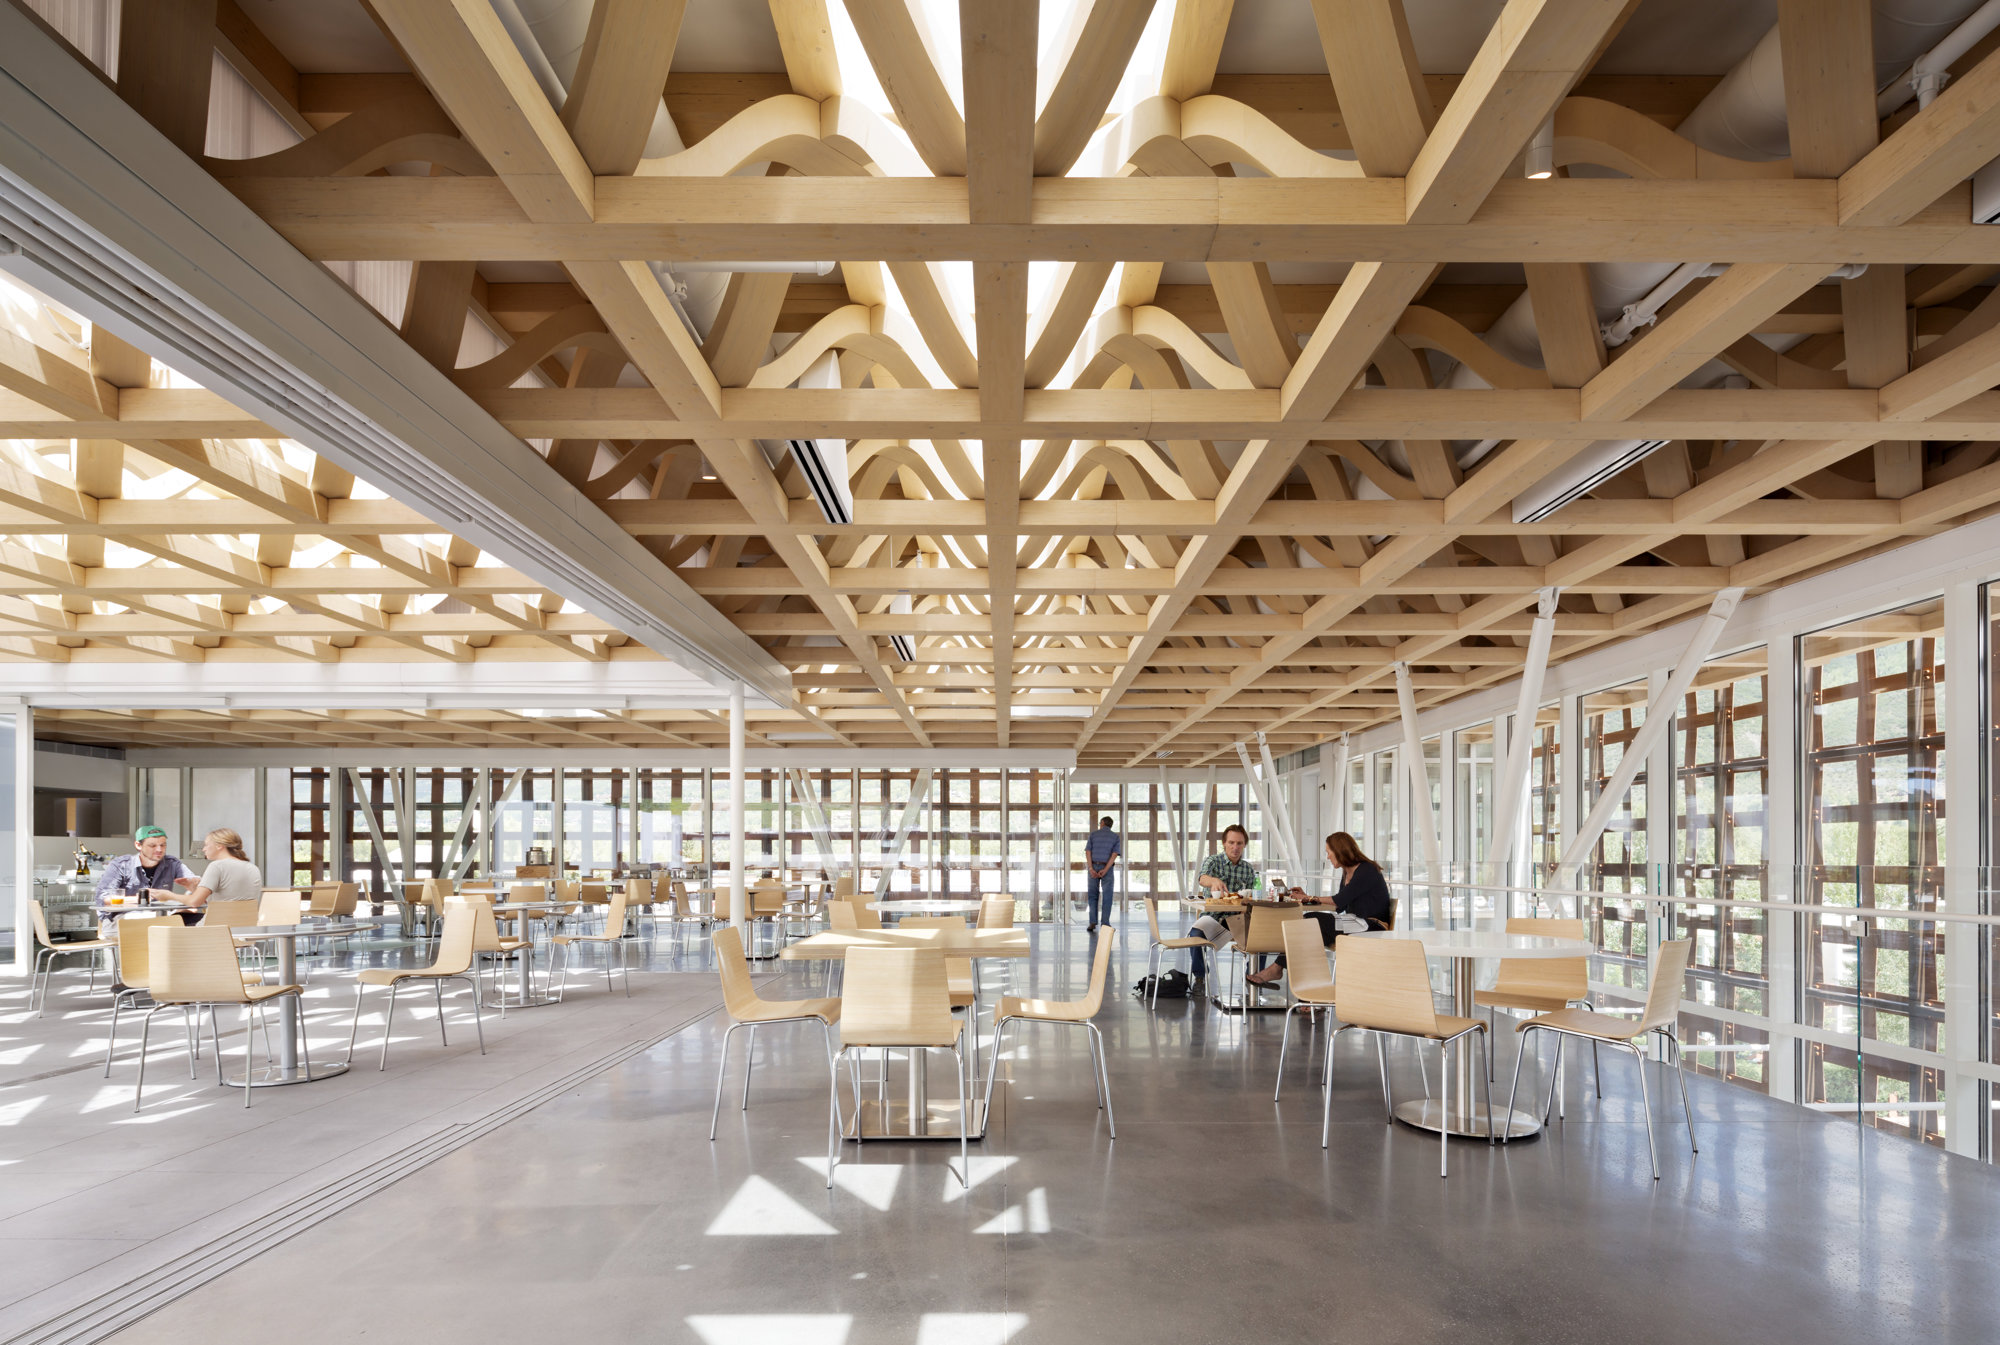 Shigeru Ban: Timber in Architecture by Shigeru Ban © Rizzoli New York, 2022.